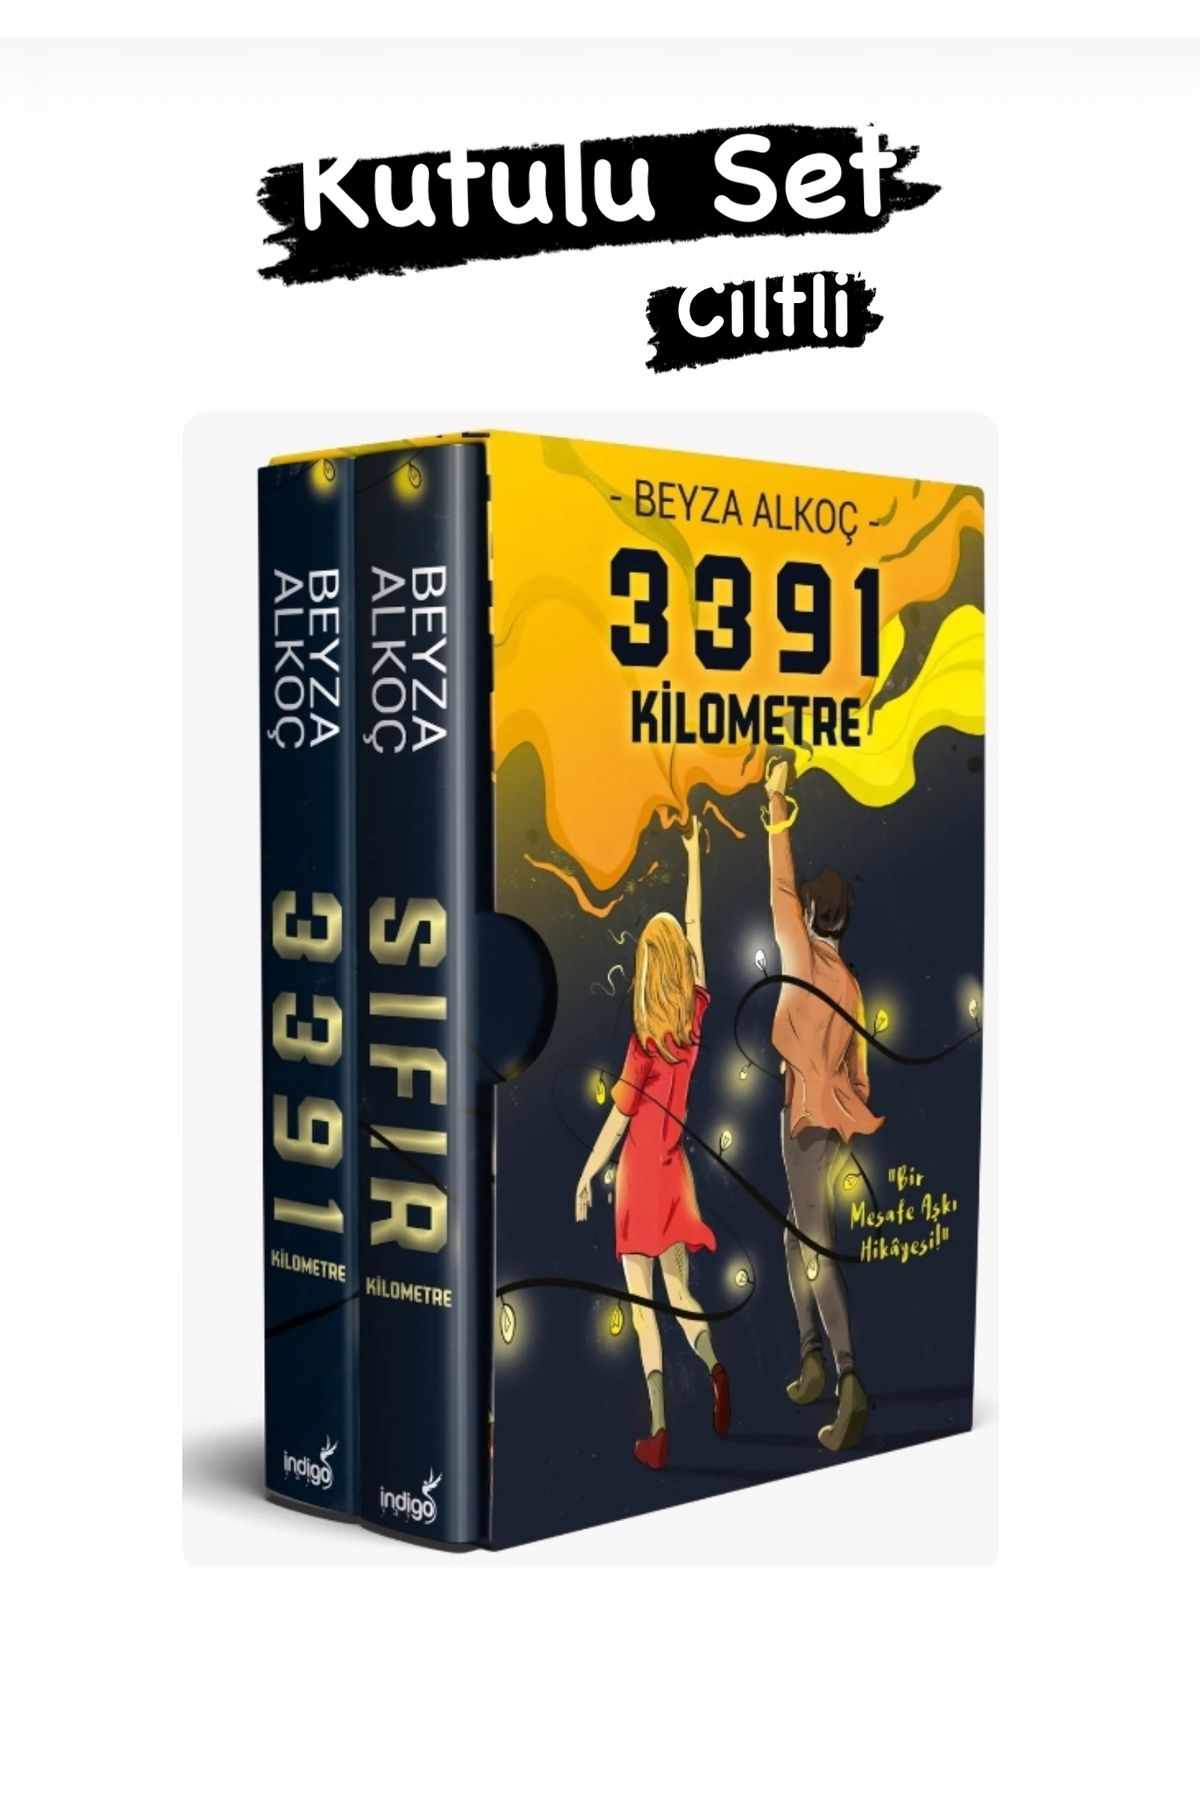 İndigo Kitap 3391 kilometre - Sıfır kilometre KUTULU set ( Ciltli )